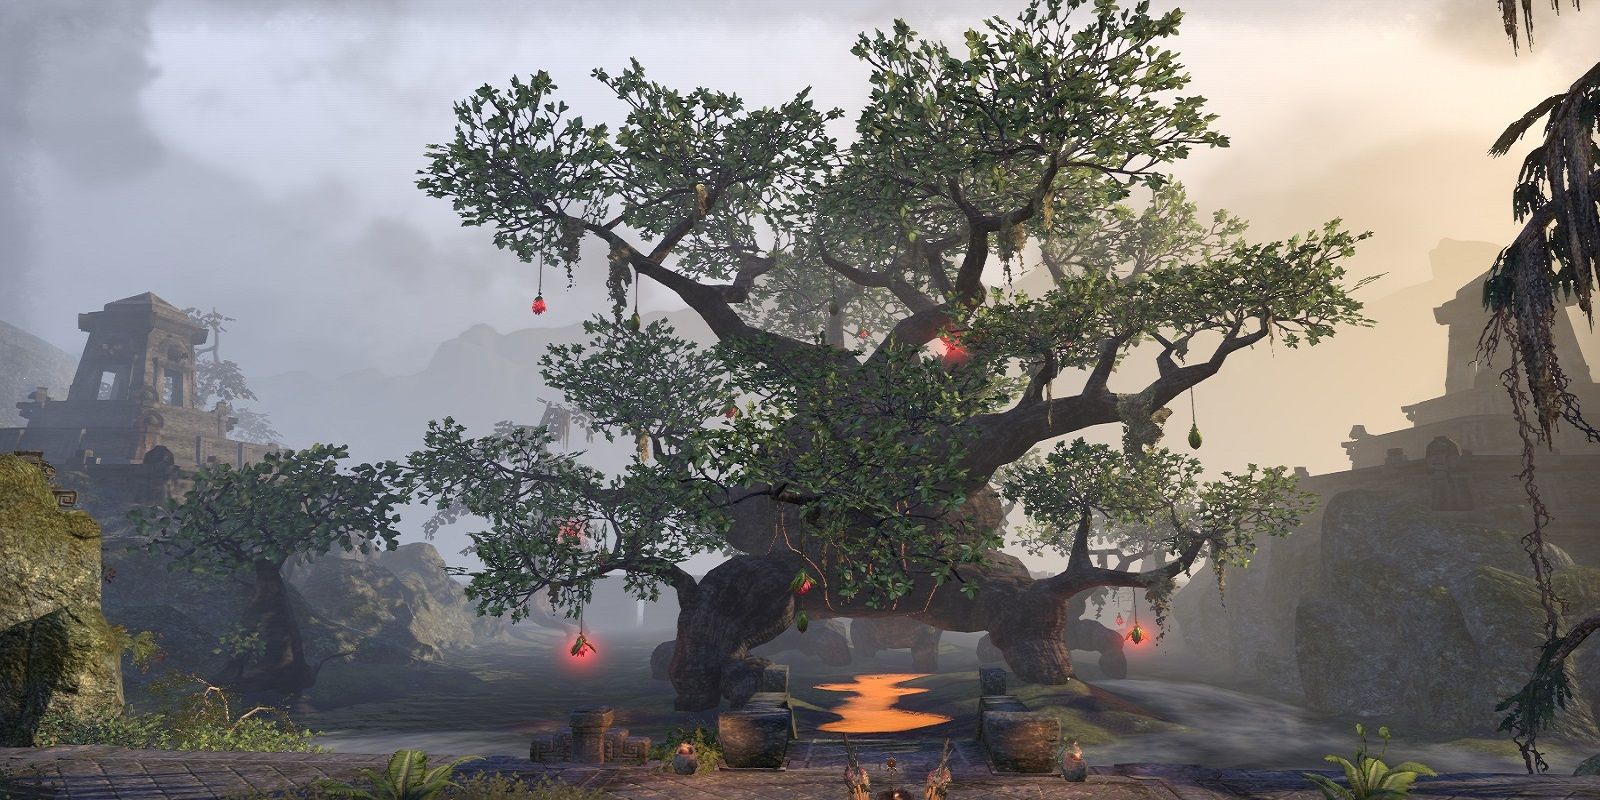 Elder Scrolls Hist Tree Early Morning Misty Lanterns Beneath Large Tree Stone Temple to the Left